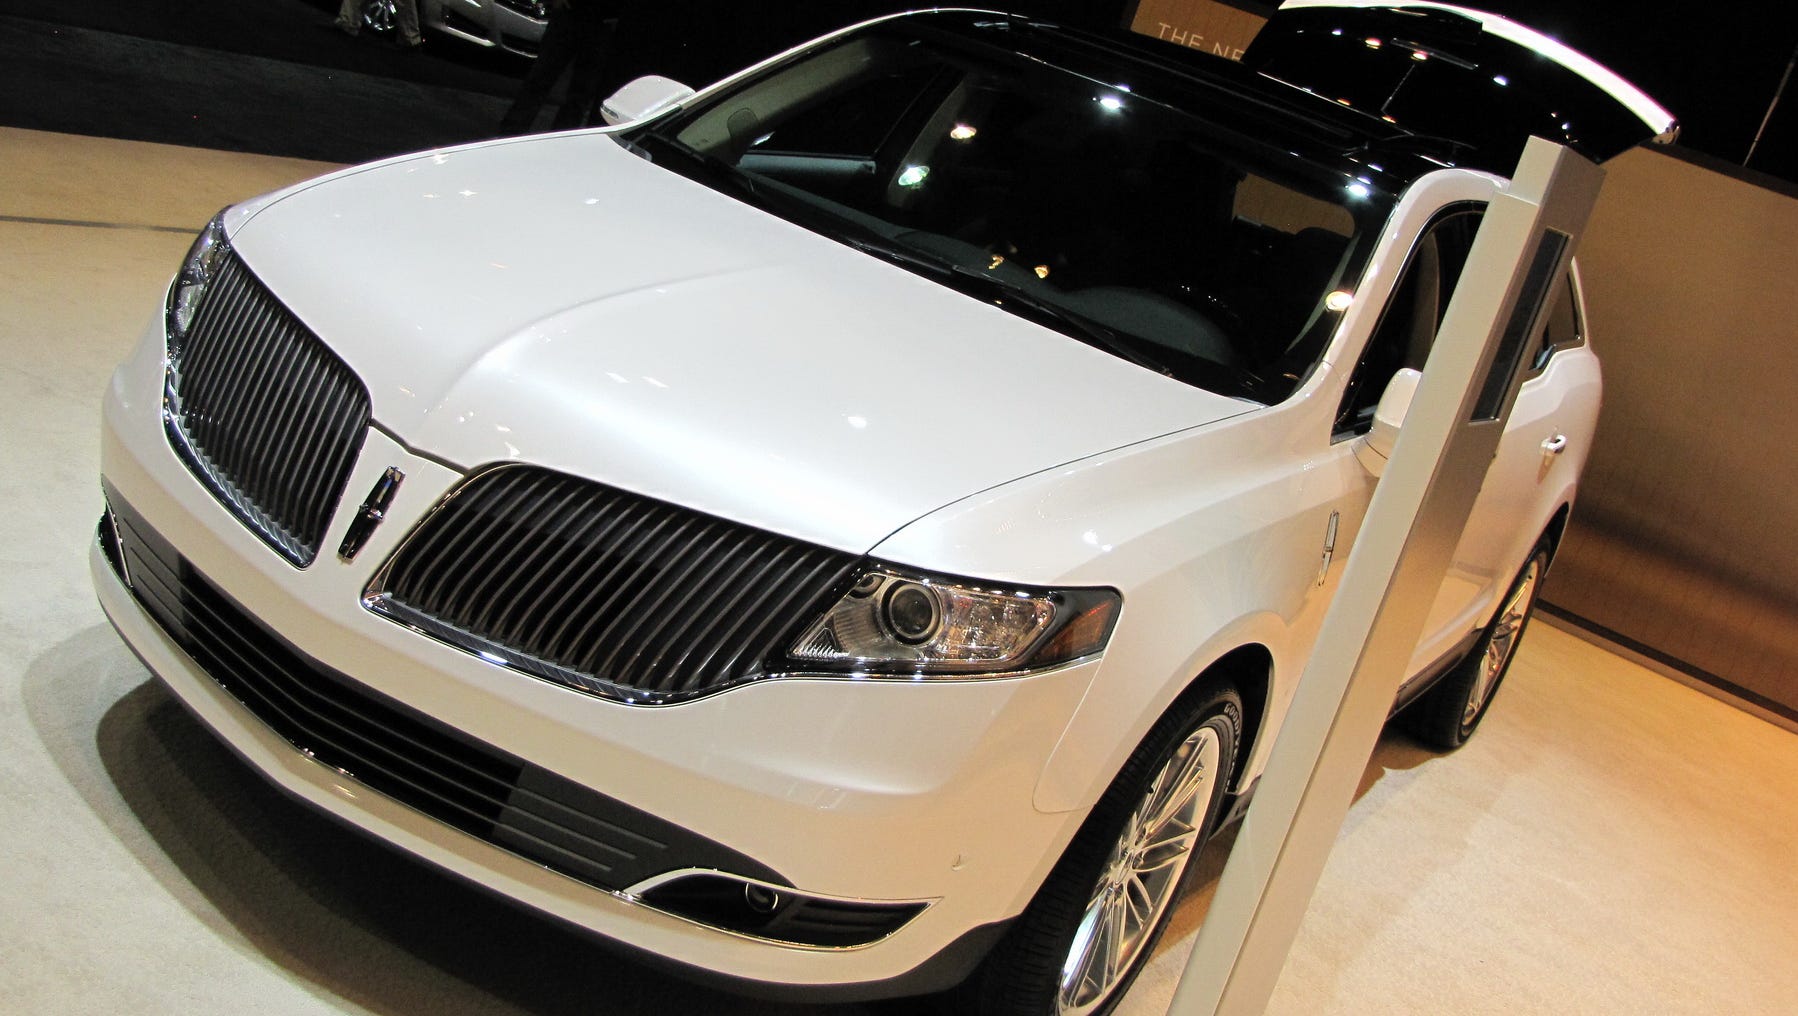 2016 Lincoln MKT is pragmatic luxury